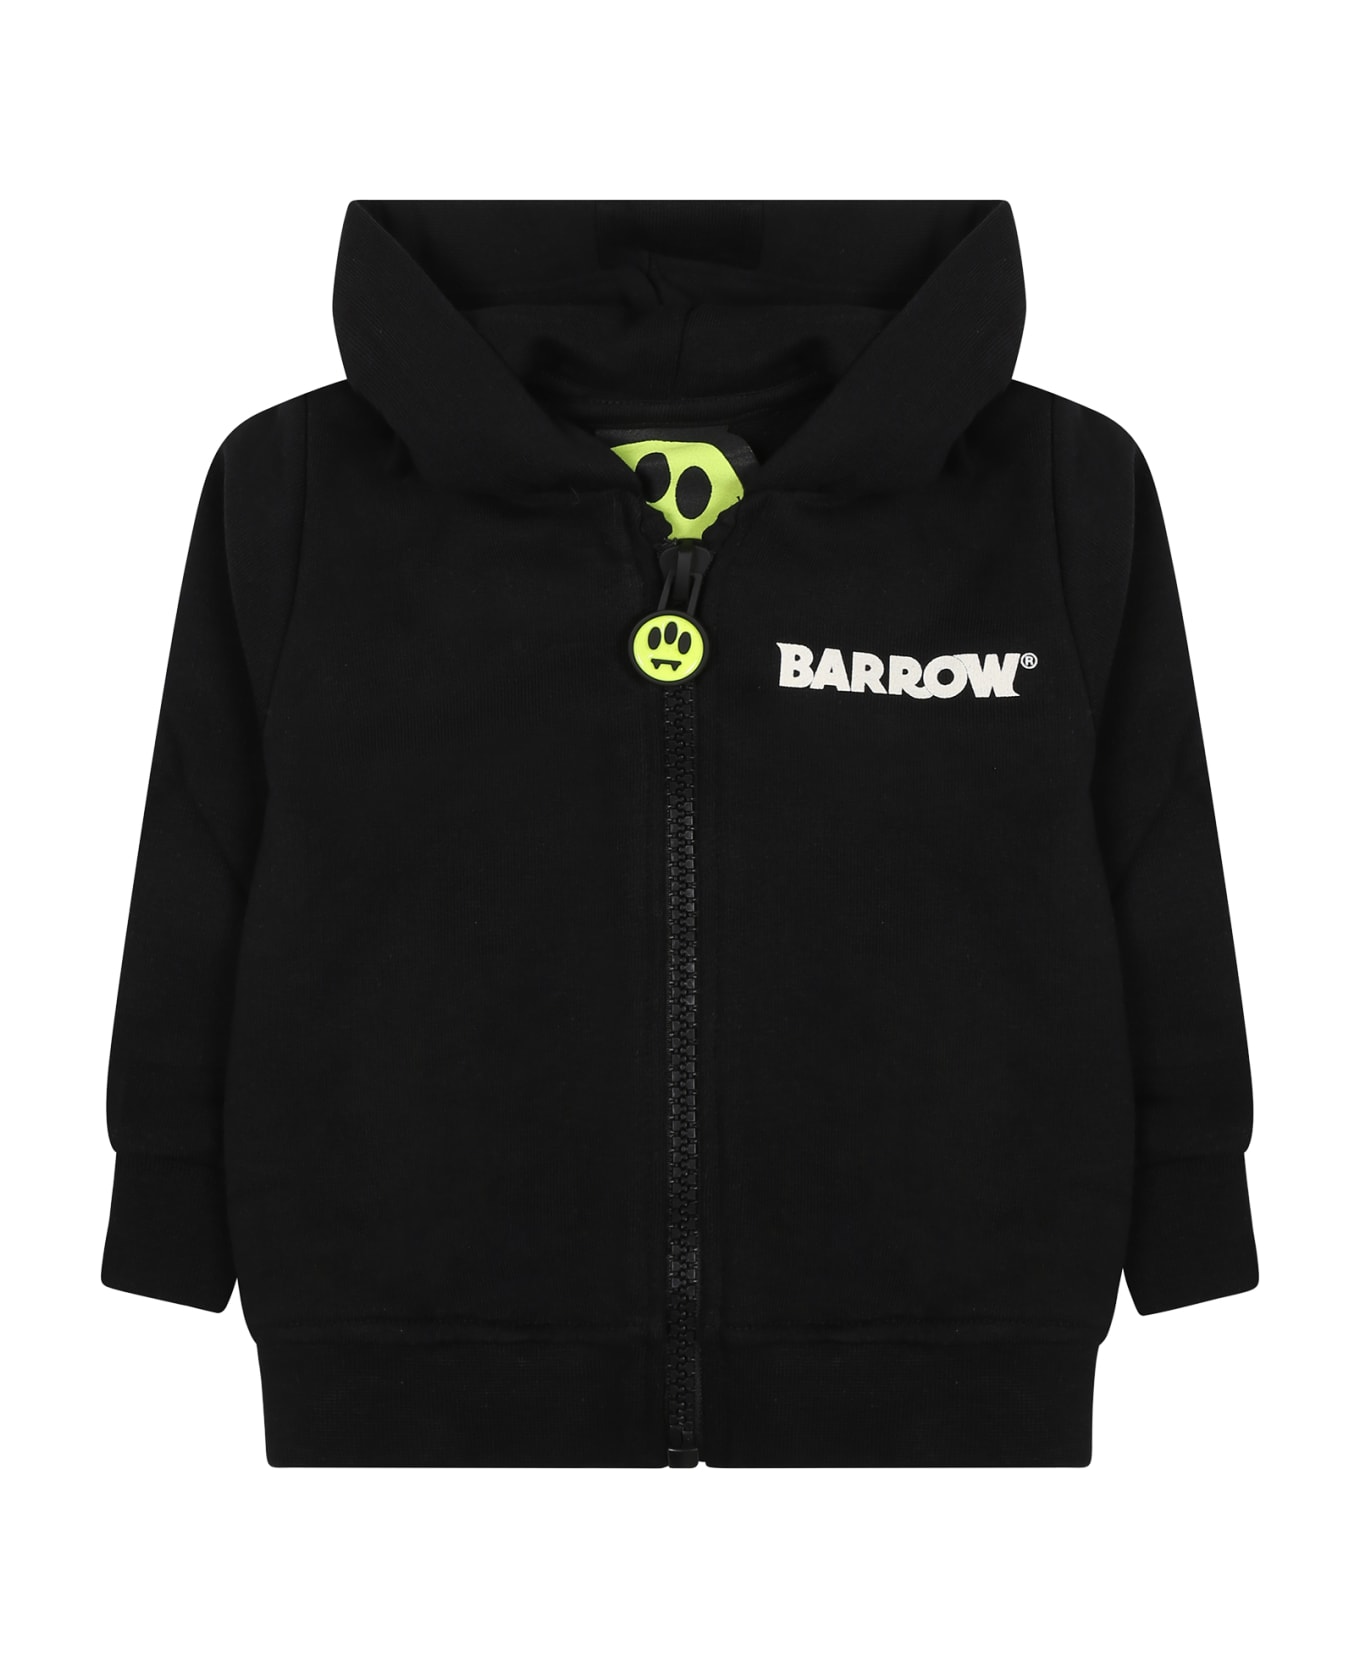 Barrow Black Sweatshirt For Baby Boy With Logo - Black